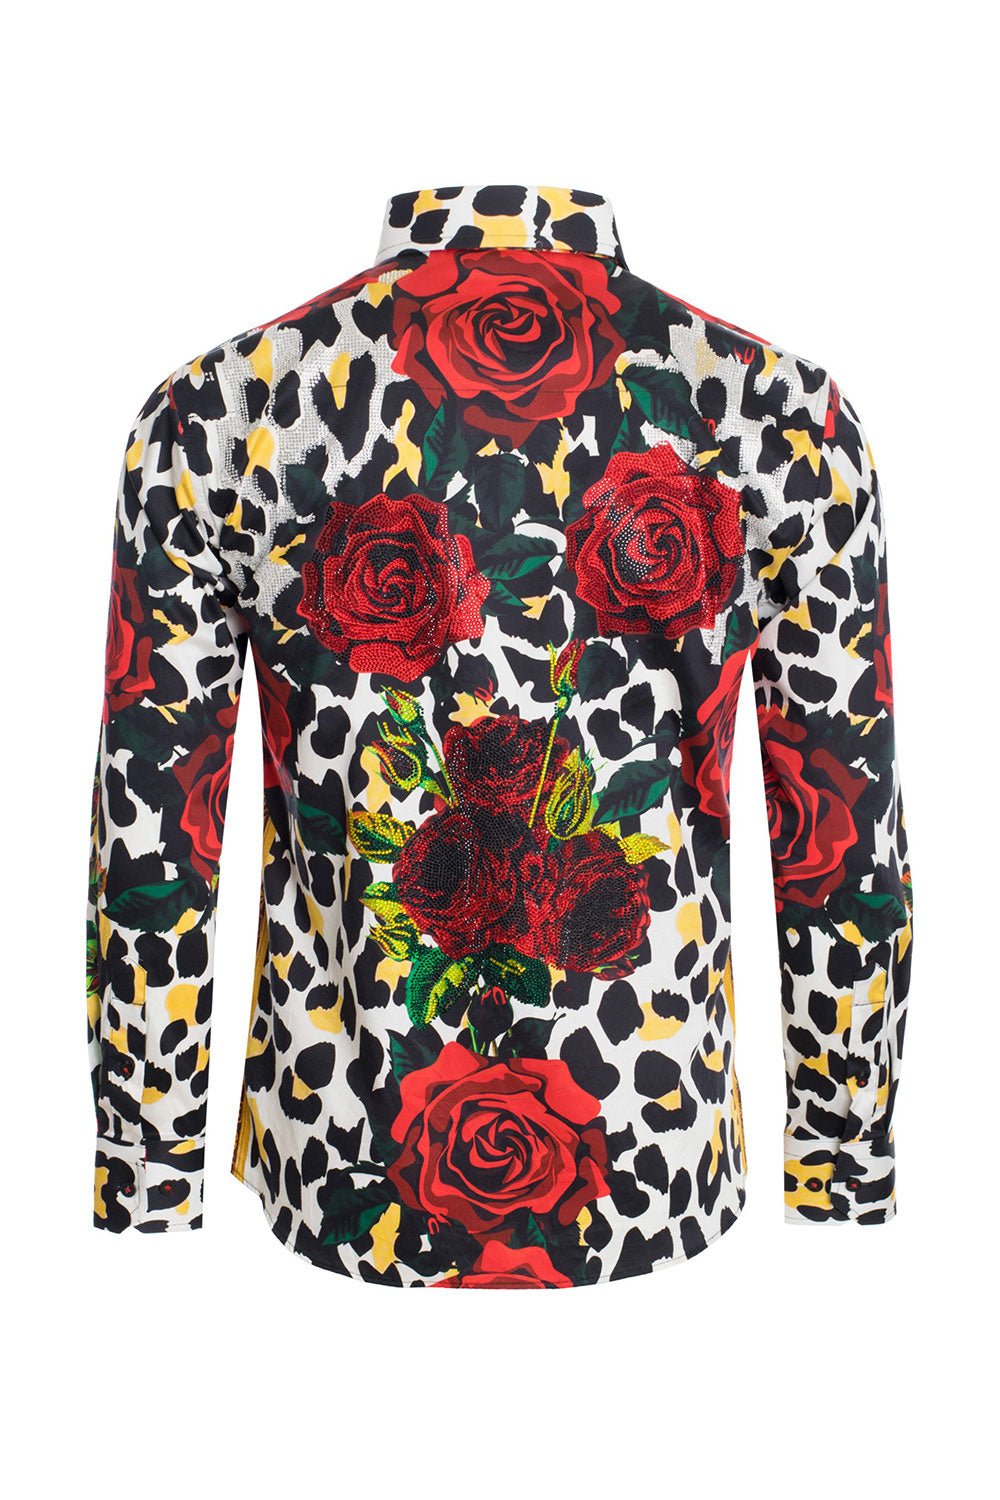 BARABAS men's Rhinestone Floral Roses Leopard Long Sleeve Shirts SPR964